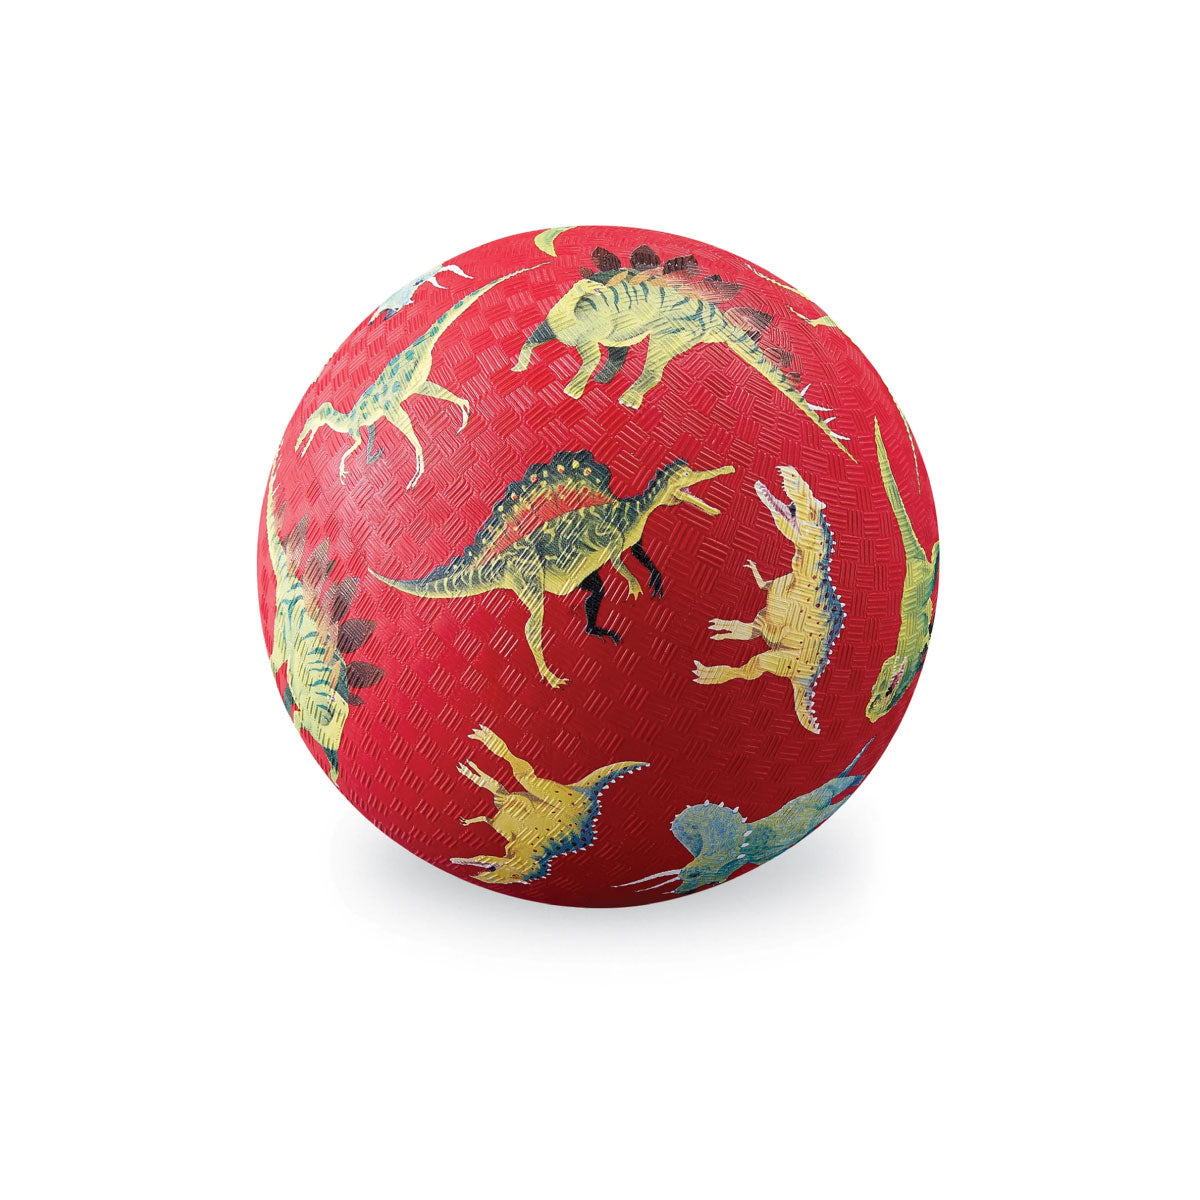 Crocodile Creek Red Dinosaur 7” Playground Ball